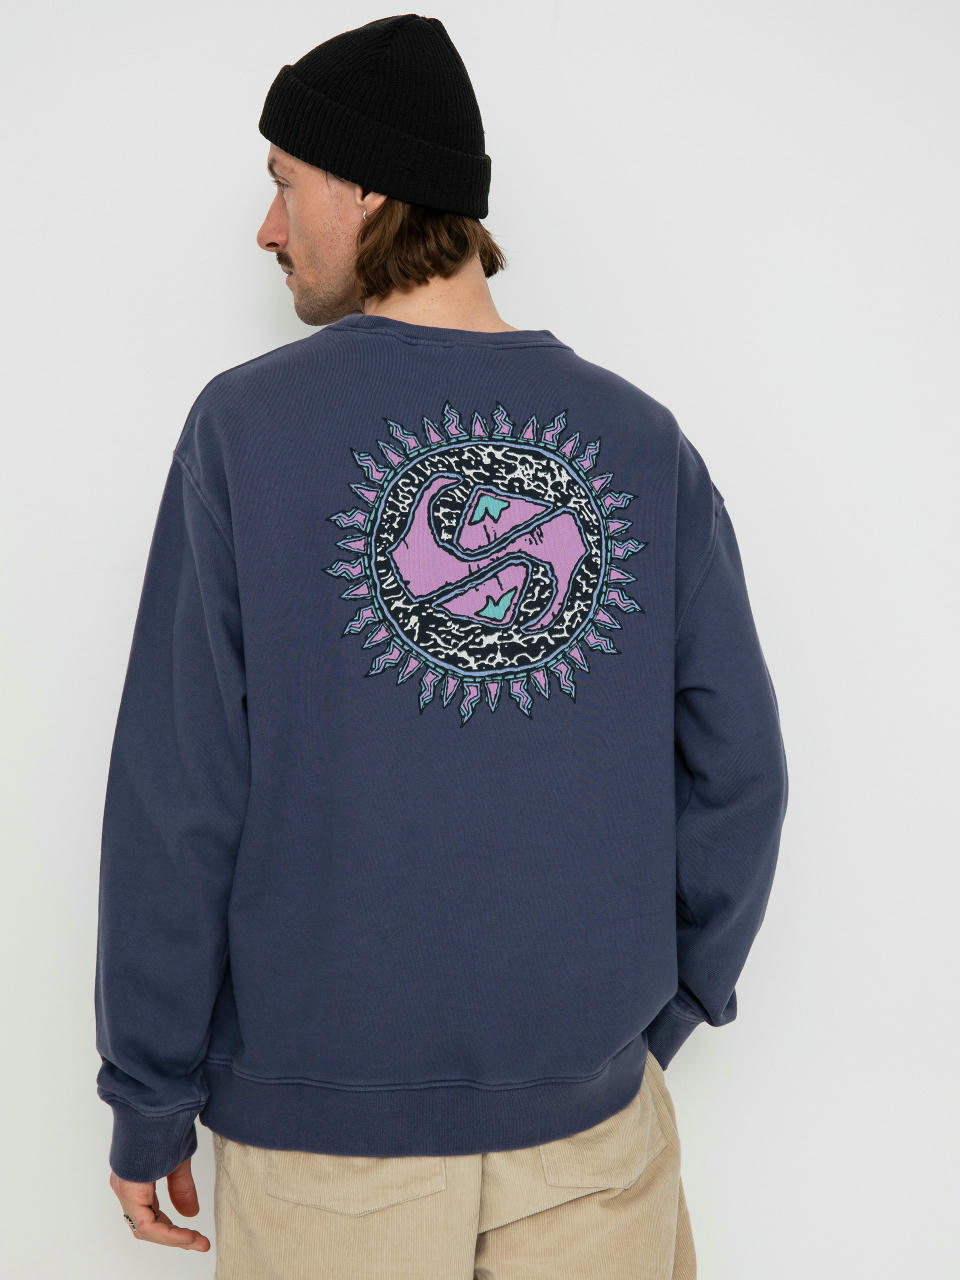 Quiksilver Spin Cycle Sweatshirt (crown blue)